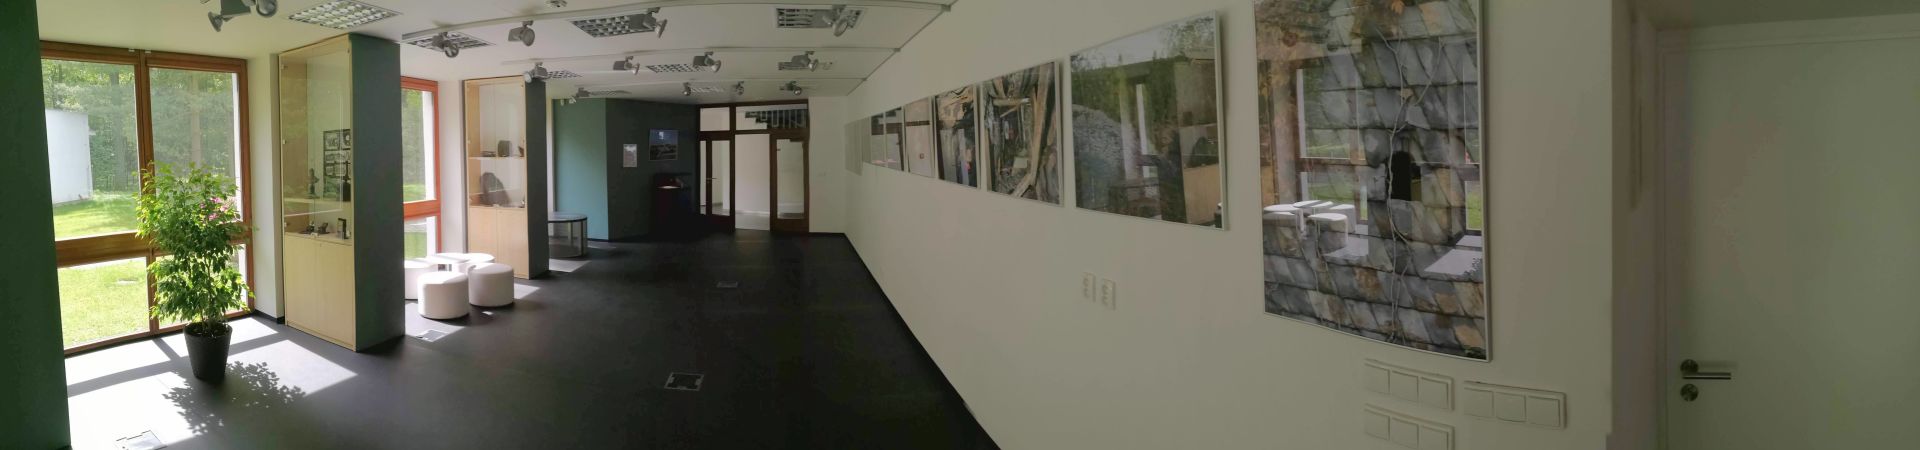 Planetárium Ostrava - Galerie Mira